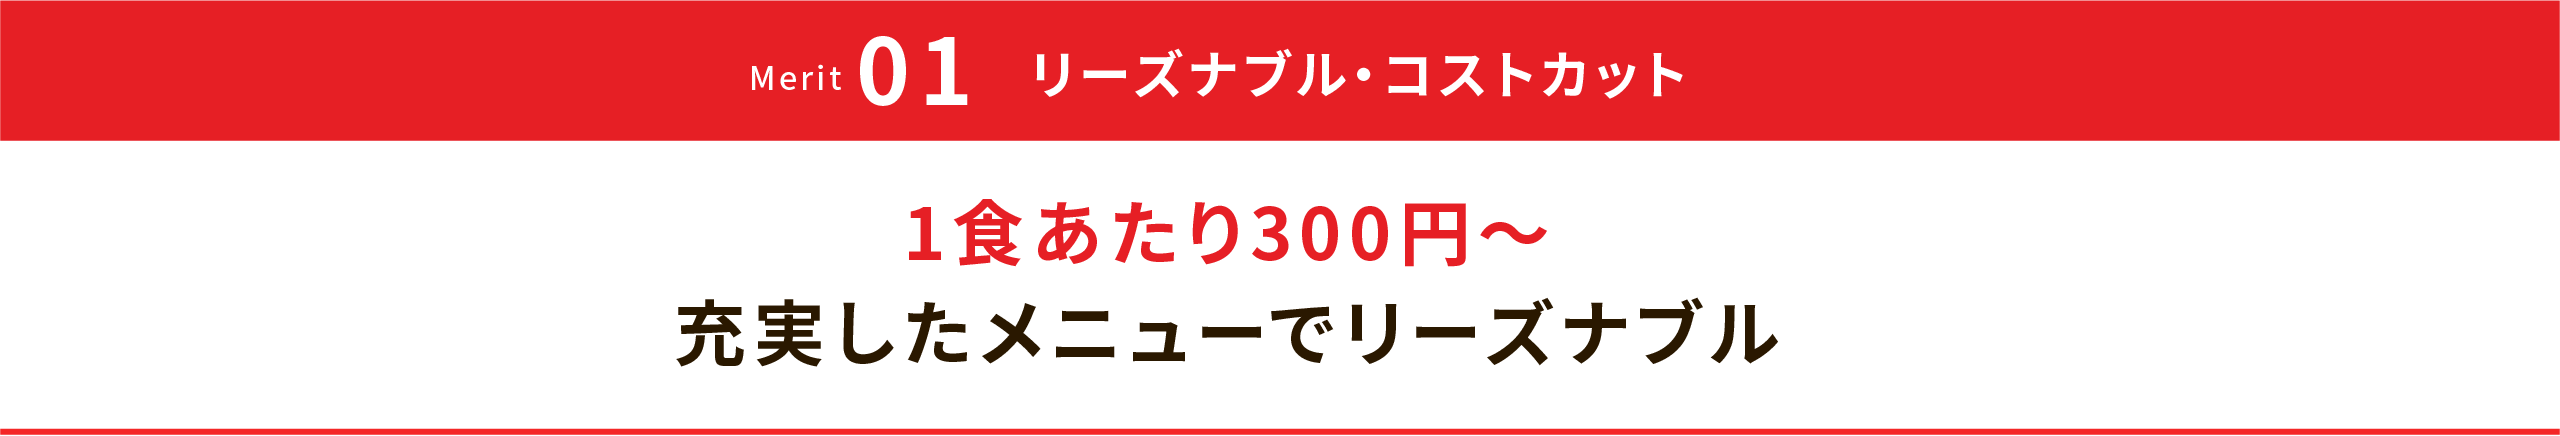 Merit 01 リーズナブル・コストカット 1食あたり300円～ 充実したメニューでリーズナブル